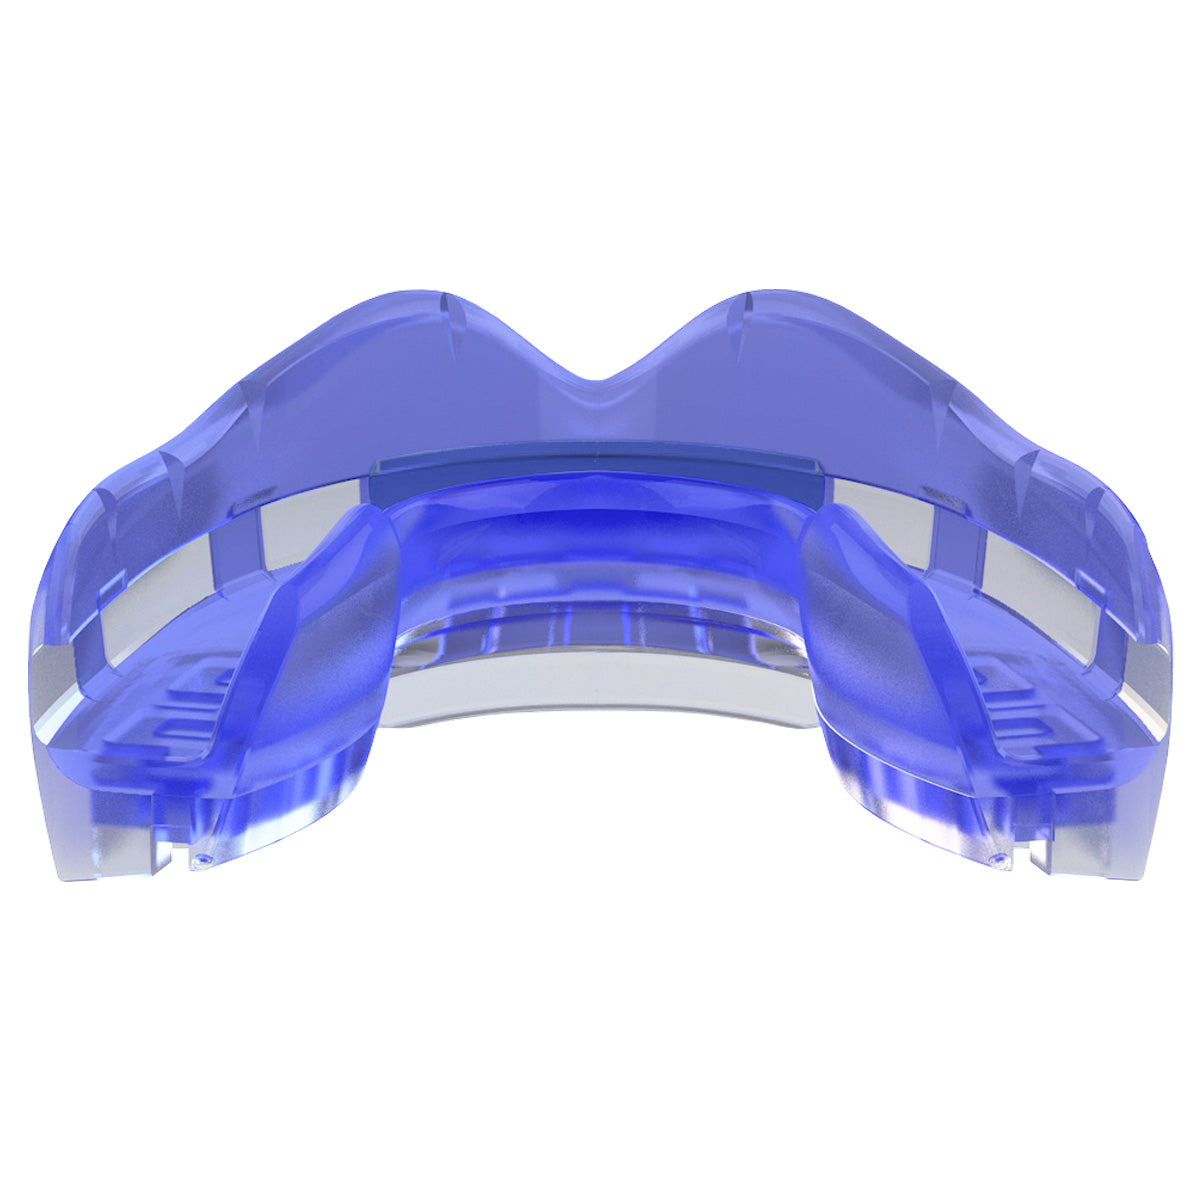 SAFEJAWZ® Ortho Series Mouthguard for Braces - Ice Blue - SAFEJAWZ gum shield